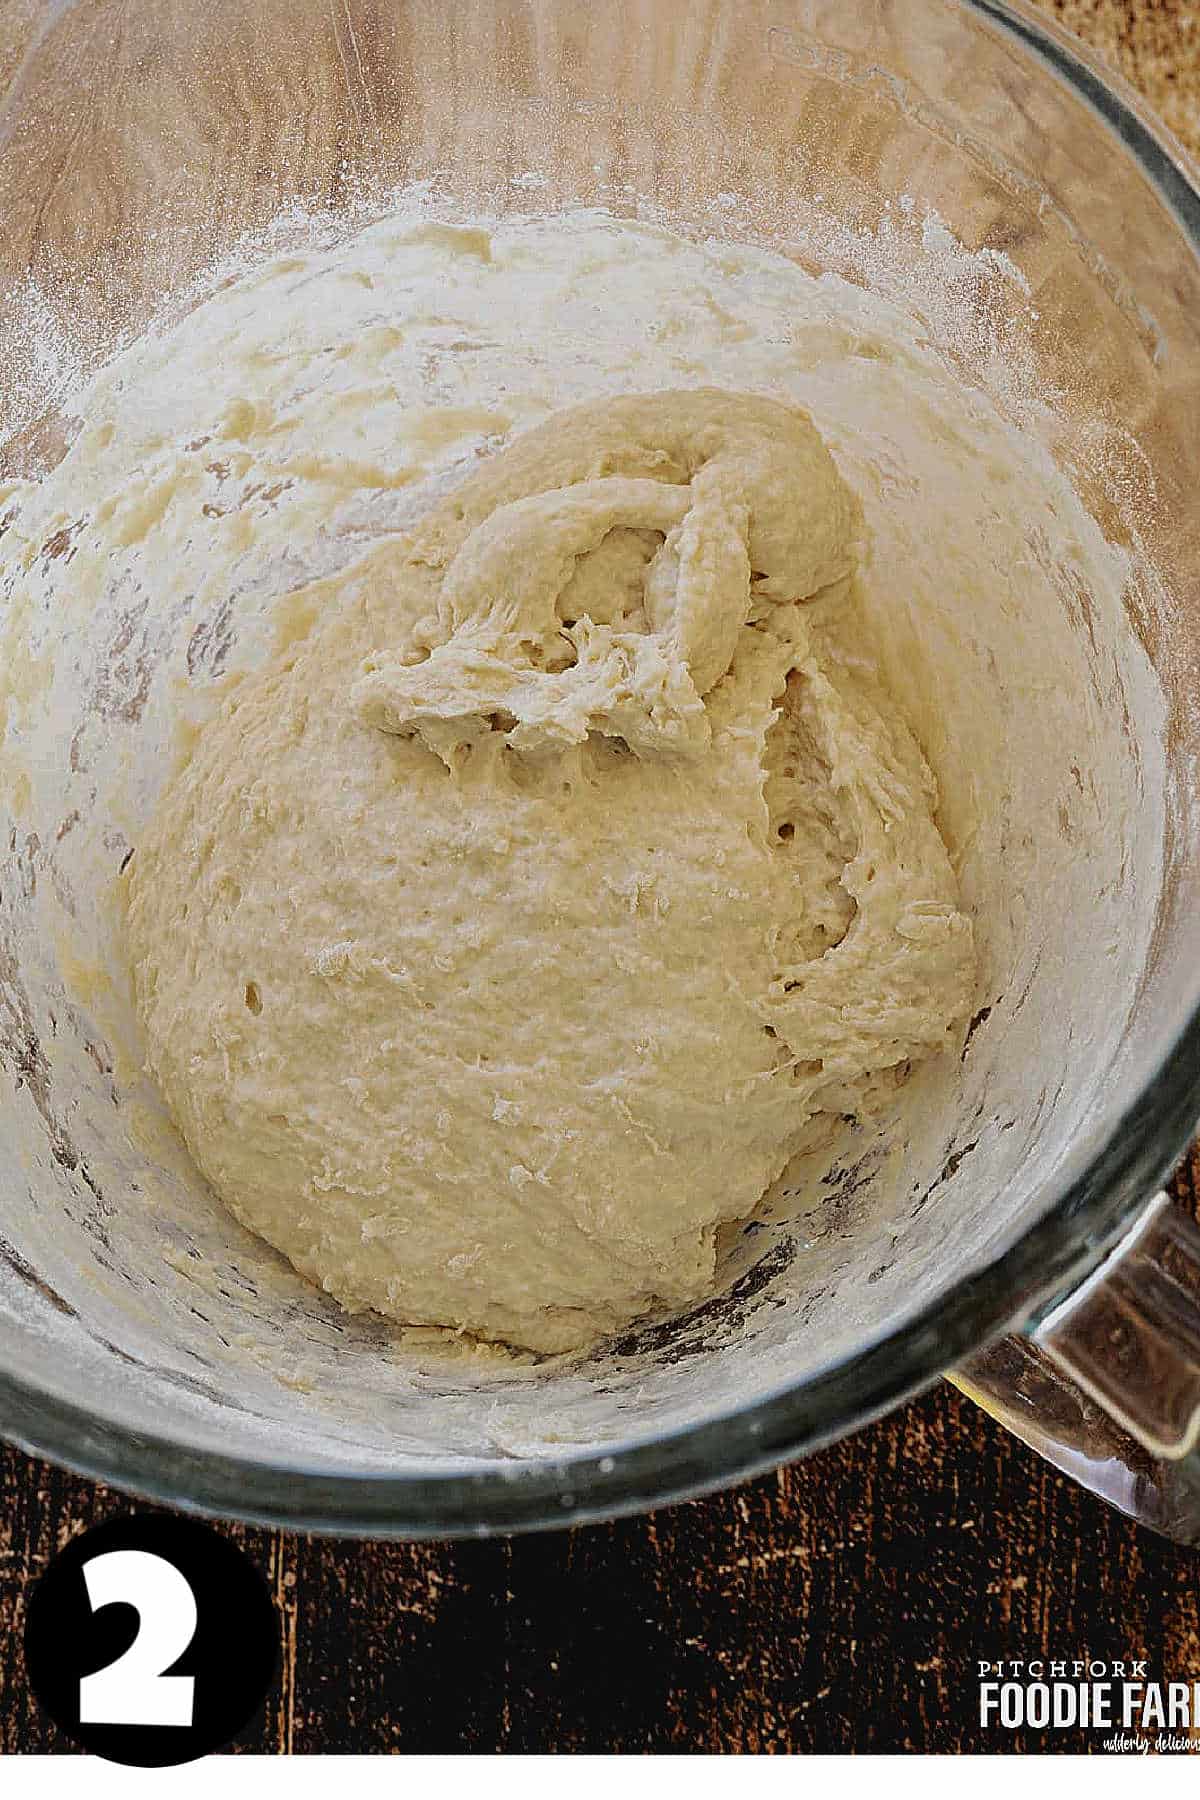 Homemade bread dough in a mixing bowl.